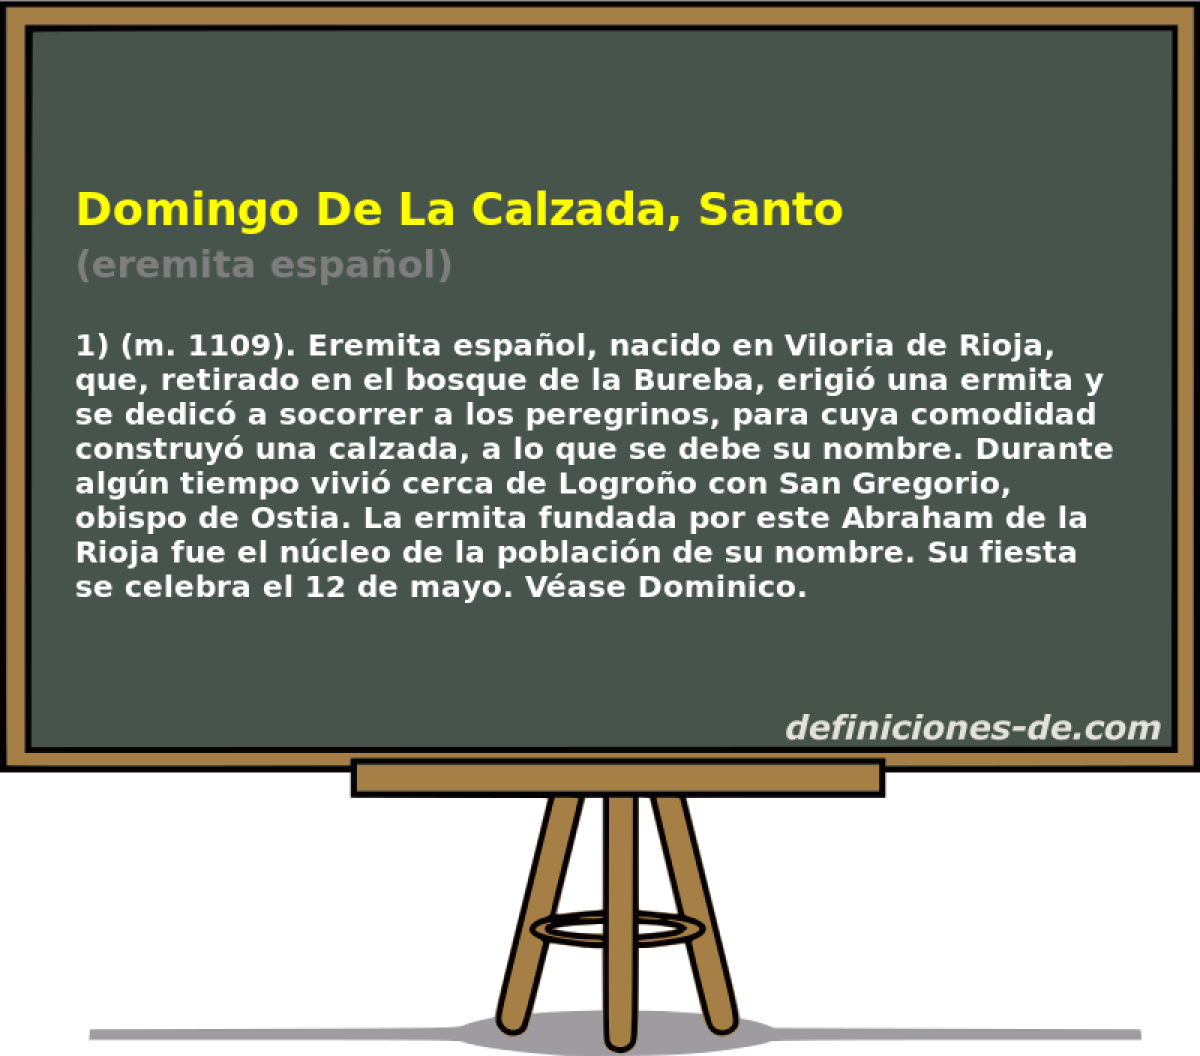 Domingo De La Calzada, Santo (eremita espaol)